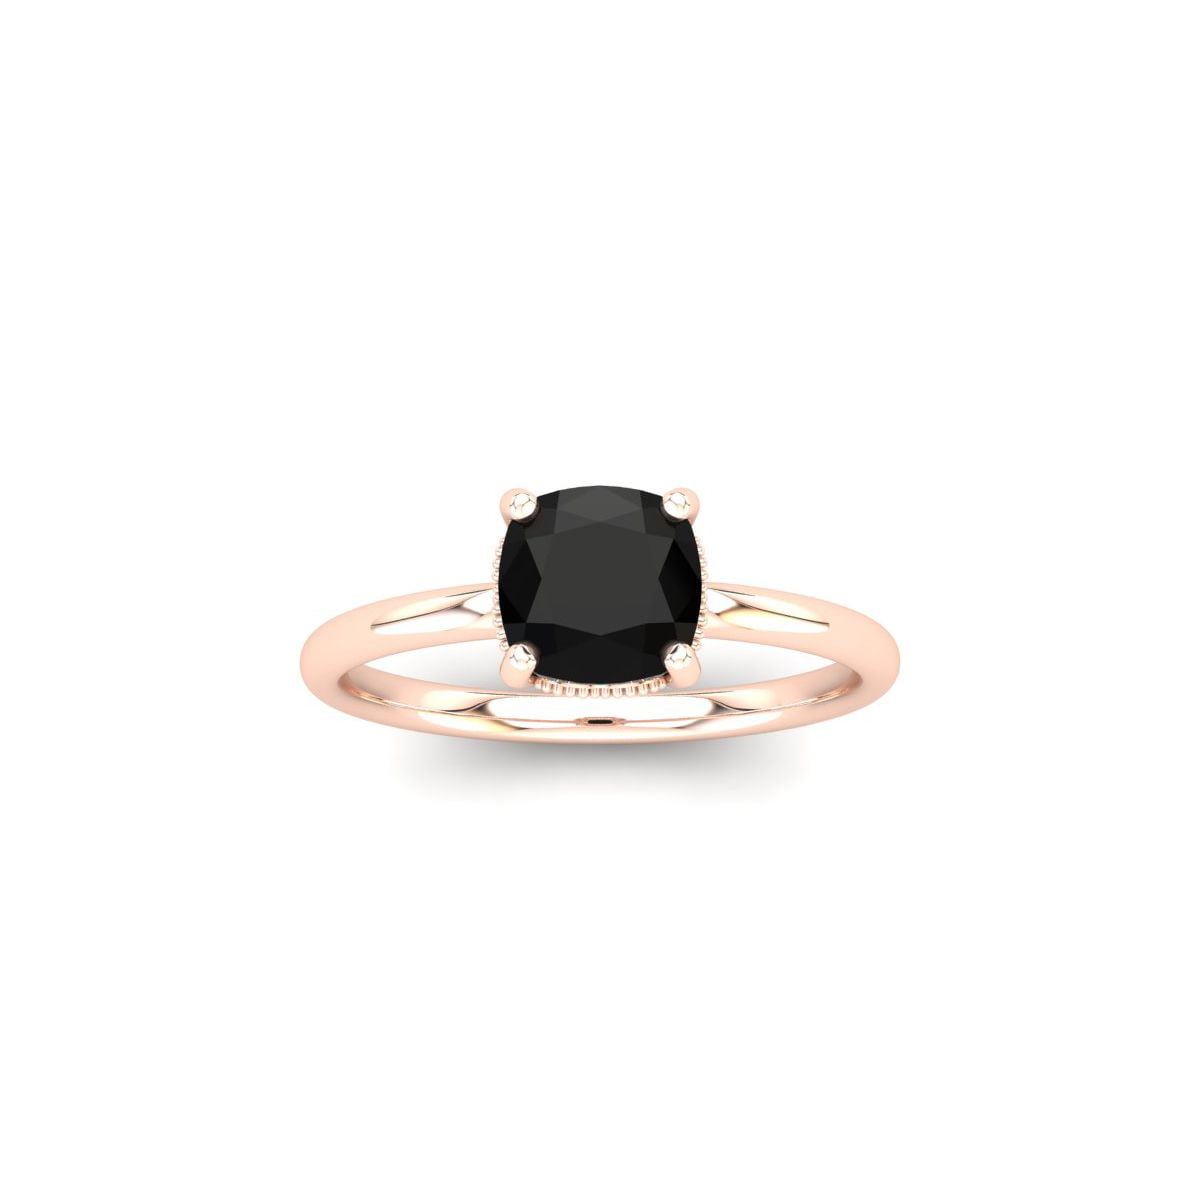 2.25 g Super Jeweler Women Accessories Jewelry Rings 1 Carat Rose Cut Cushion Cut Black & White 9 Diamond Ring in 14K by 